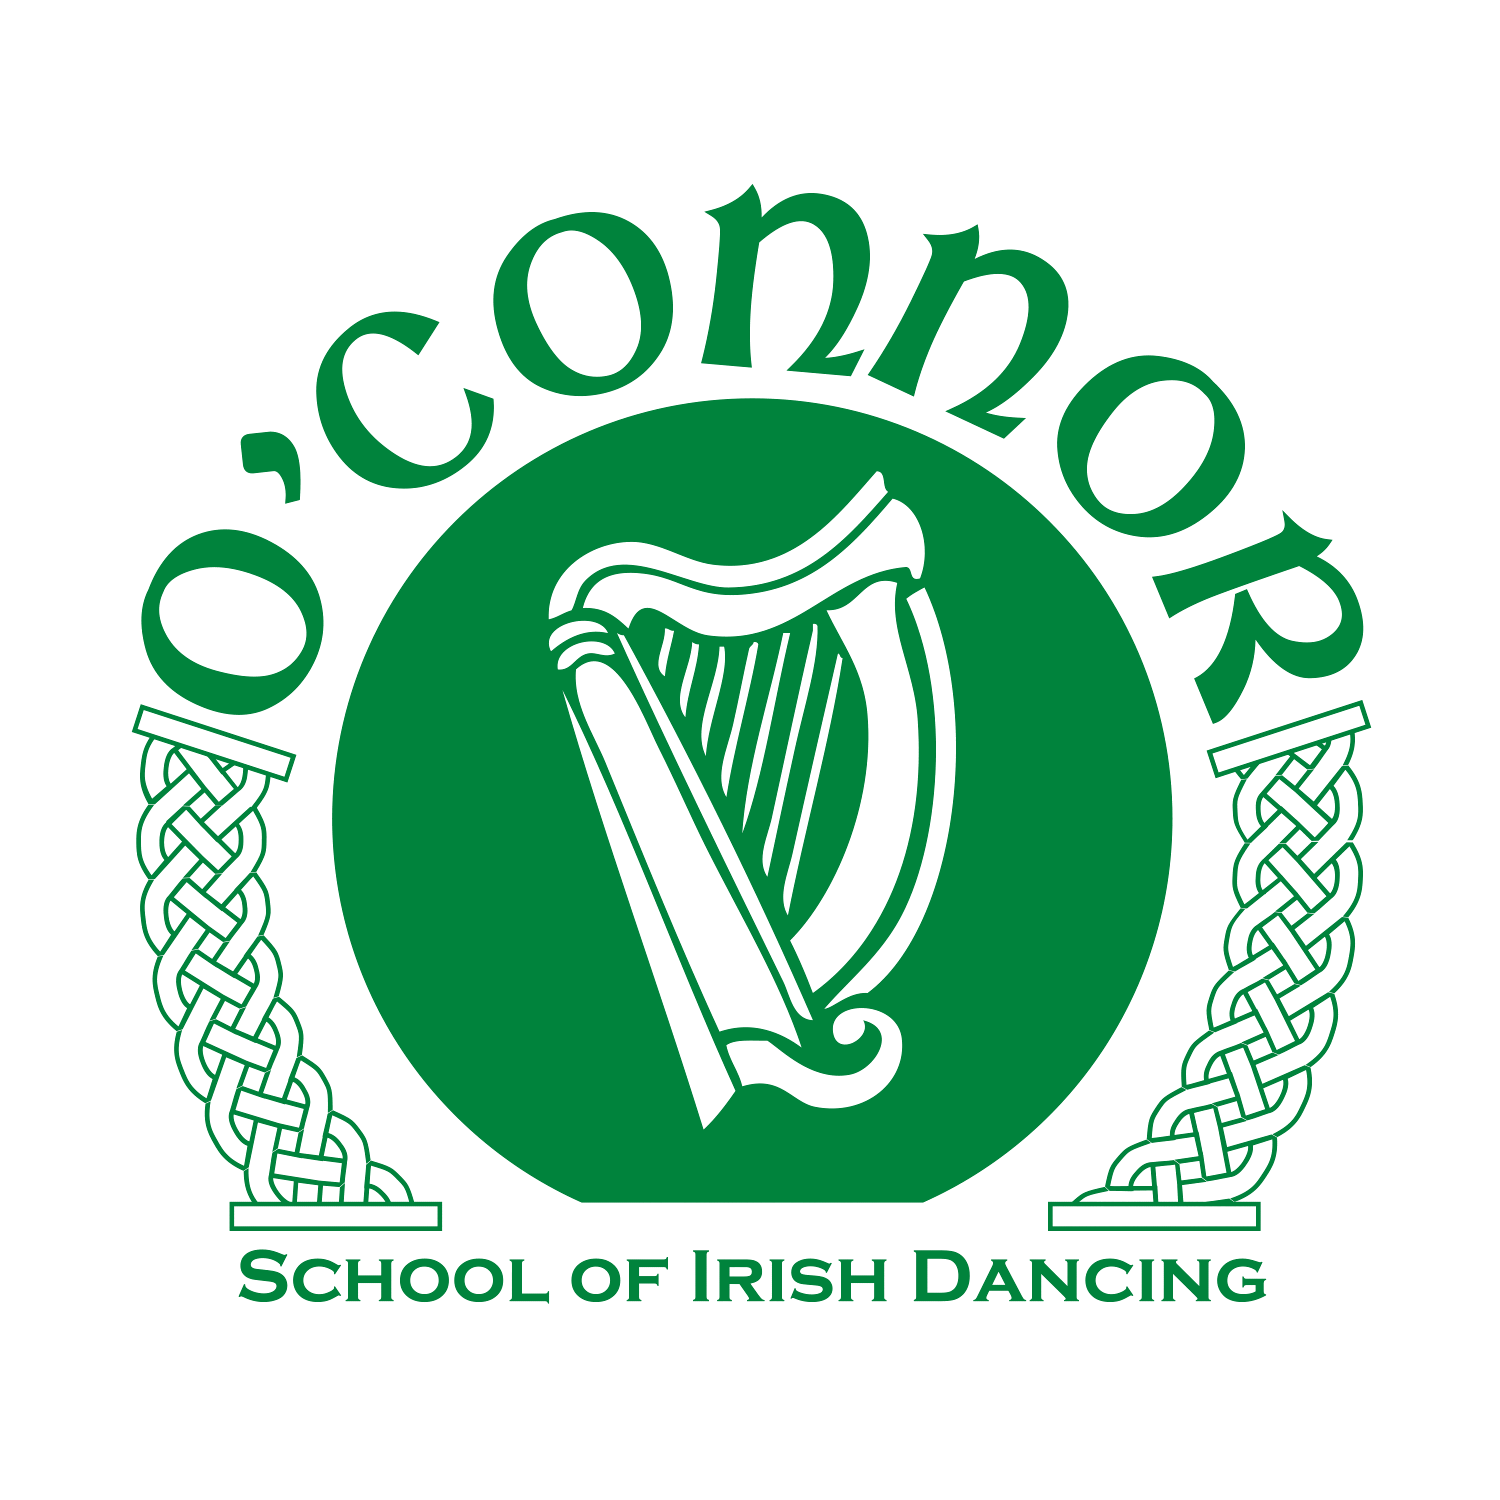 The O'Connor School of Irish Dancing